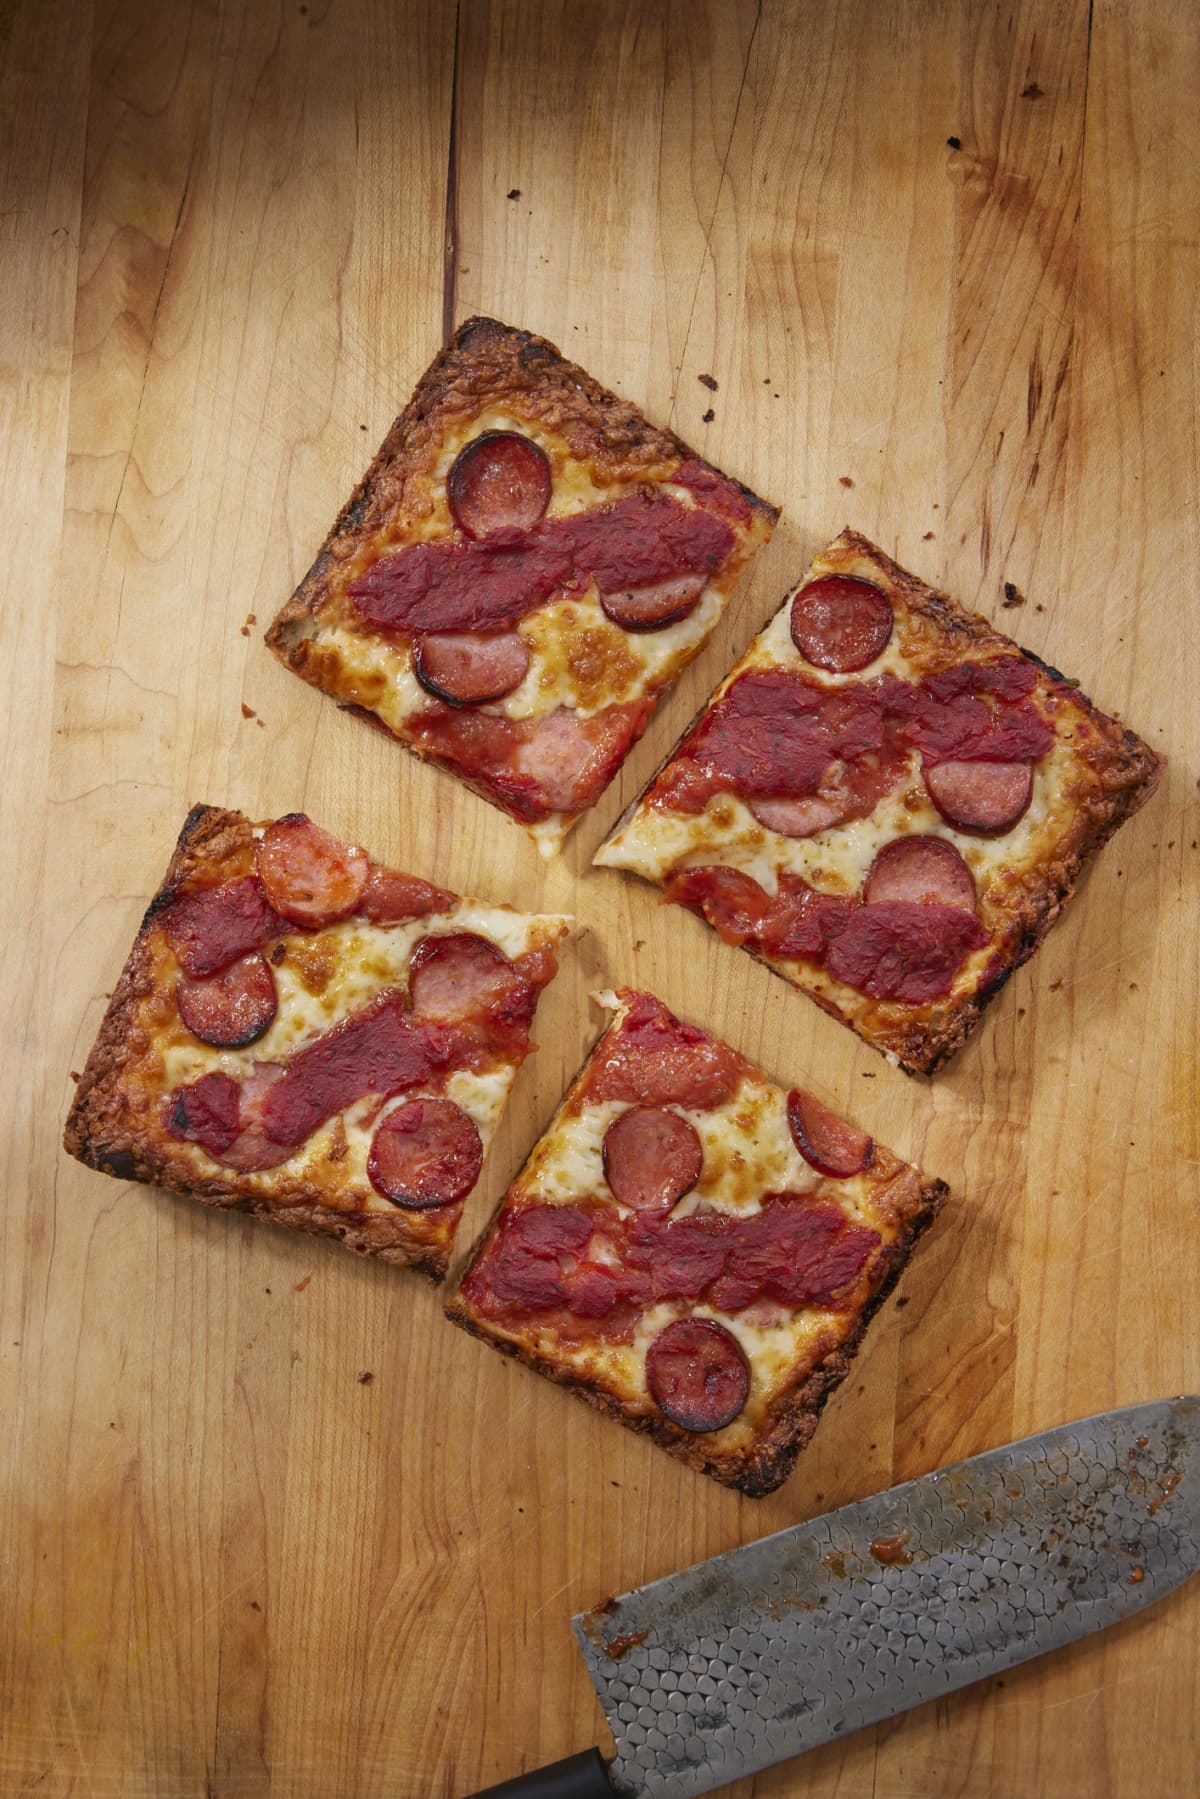 Square slices of a non-veg, thin-crust pizza.